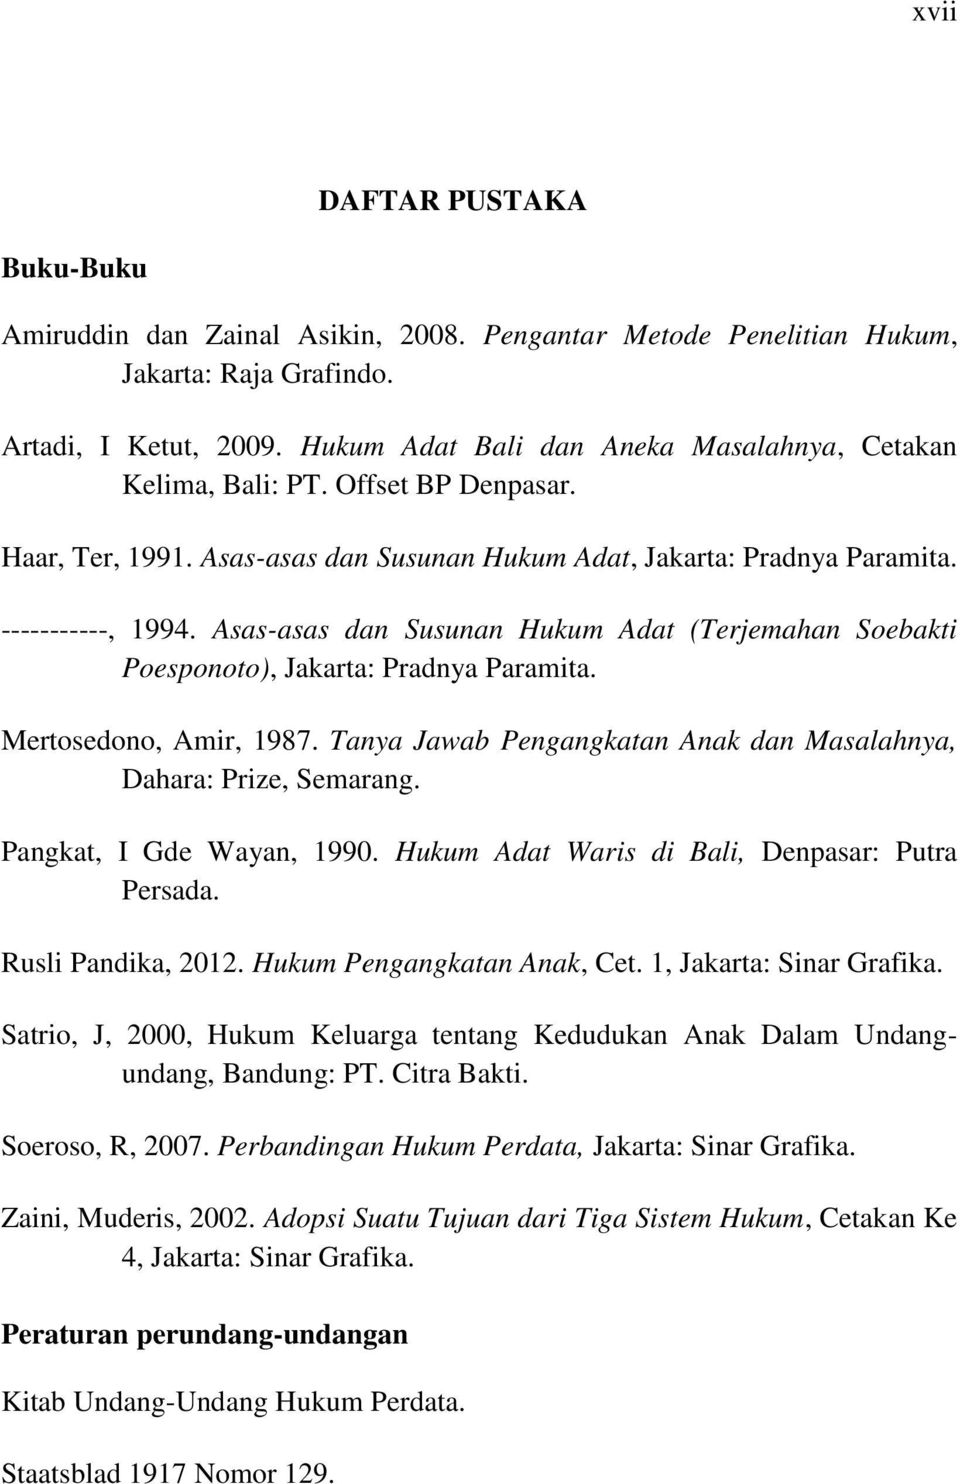 Asas-asas dan Susunan Hukum Adat (Terjemahan Soebakti Poesponoto), Jakarta: Pradnya Paramita. Mertosedono, Amir, 1987. Tanya Jawab Pengangkatan Anak dan Masalahnya, Dahara: Prize, Semarang.